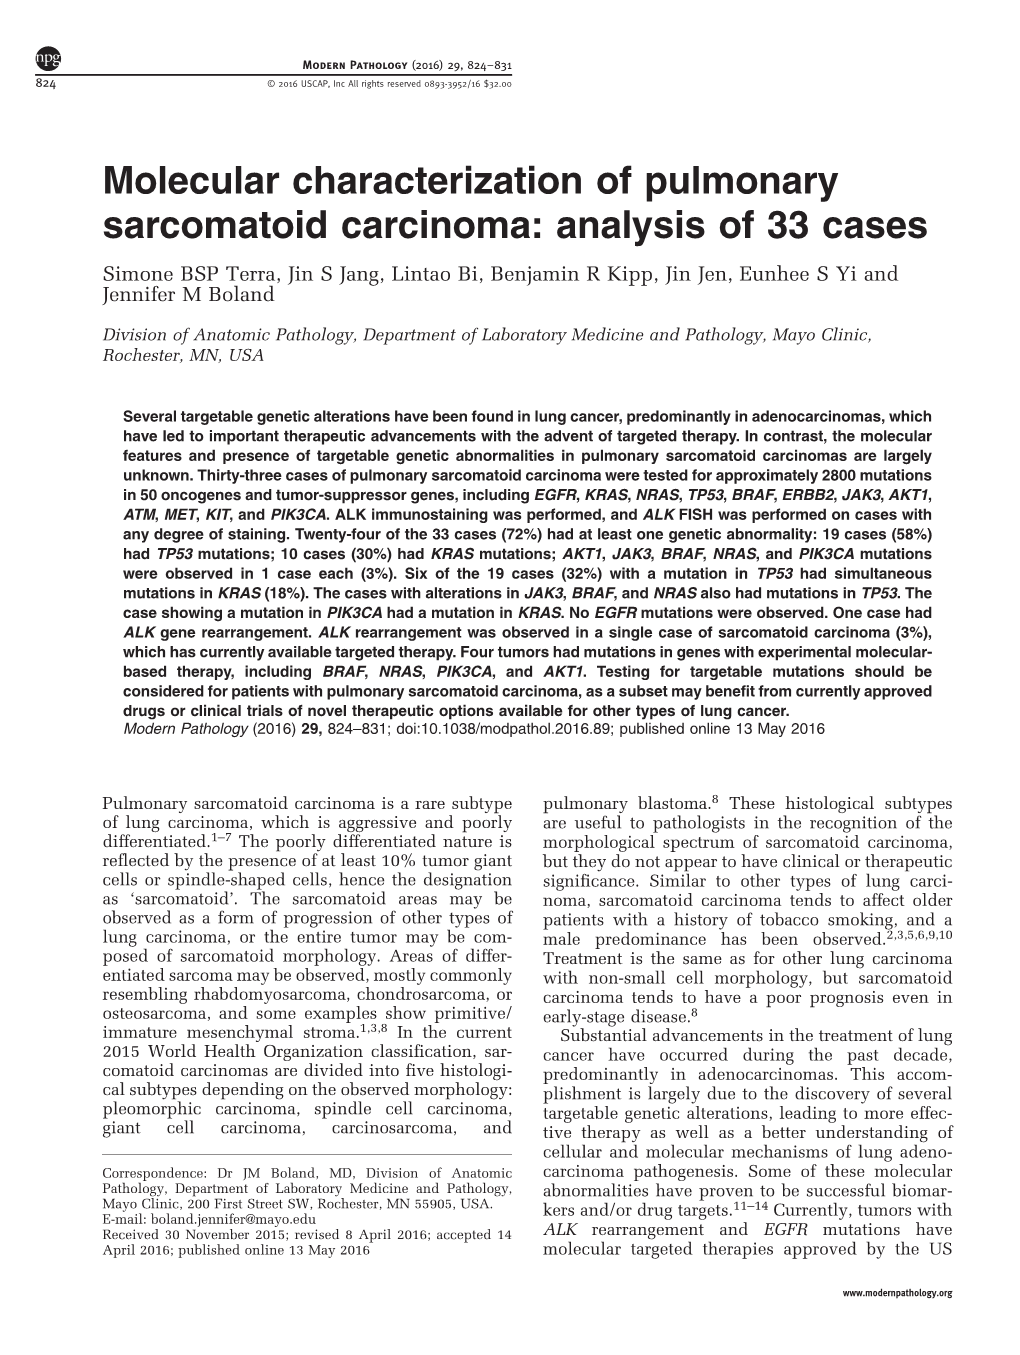 Molecular Characterization of Pulmonary Sarcomatoid Carcinoma